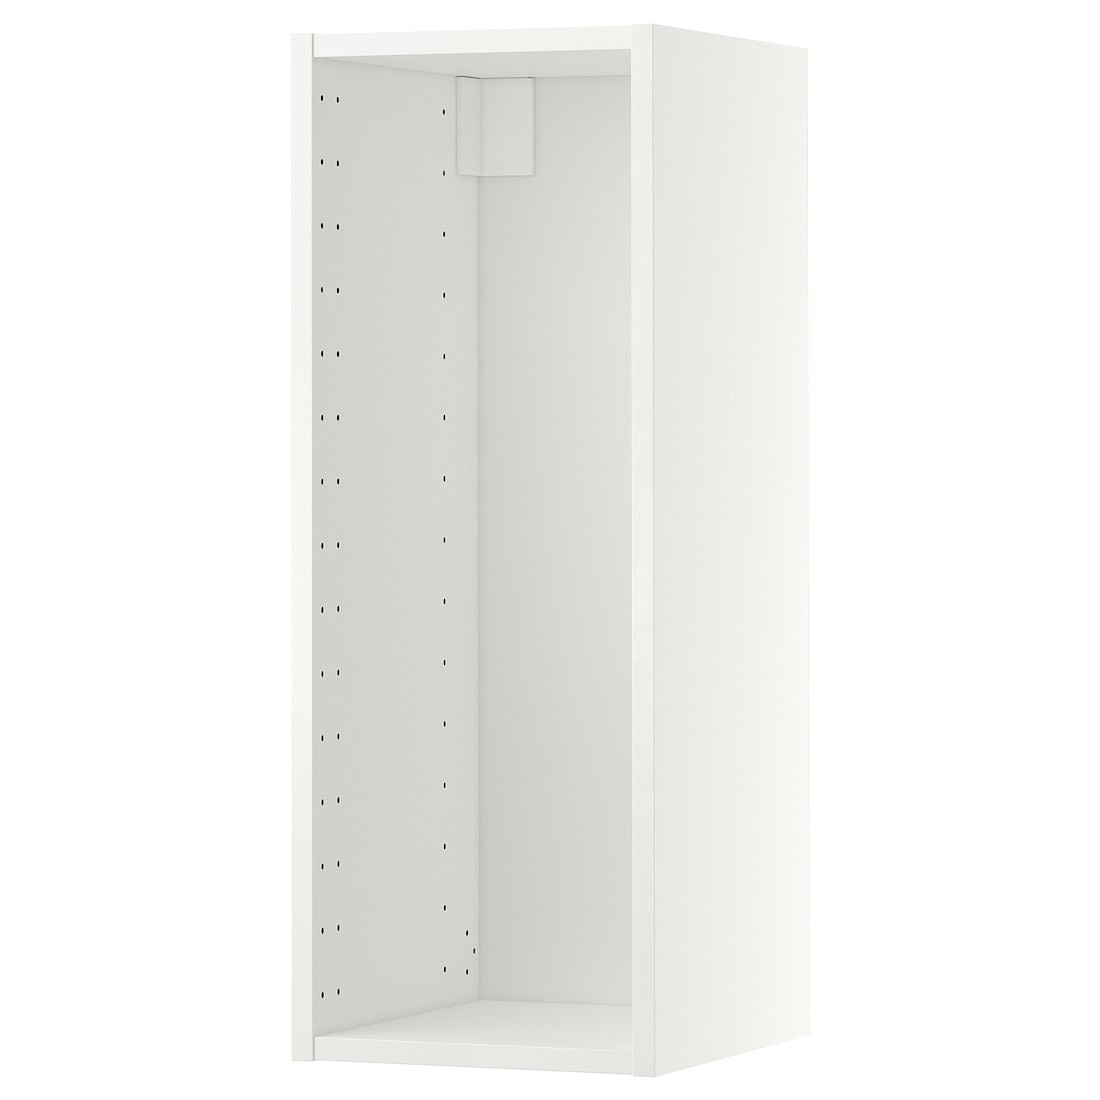 IKEA METOD МЕТОД Каркас навесного шкафа, белый, 30x37x80 см 70417298 704.172.98